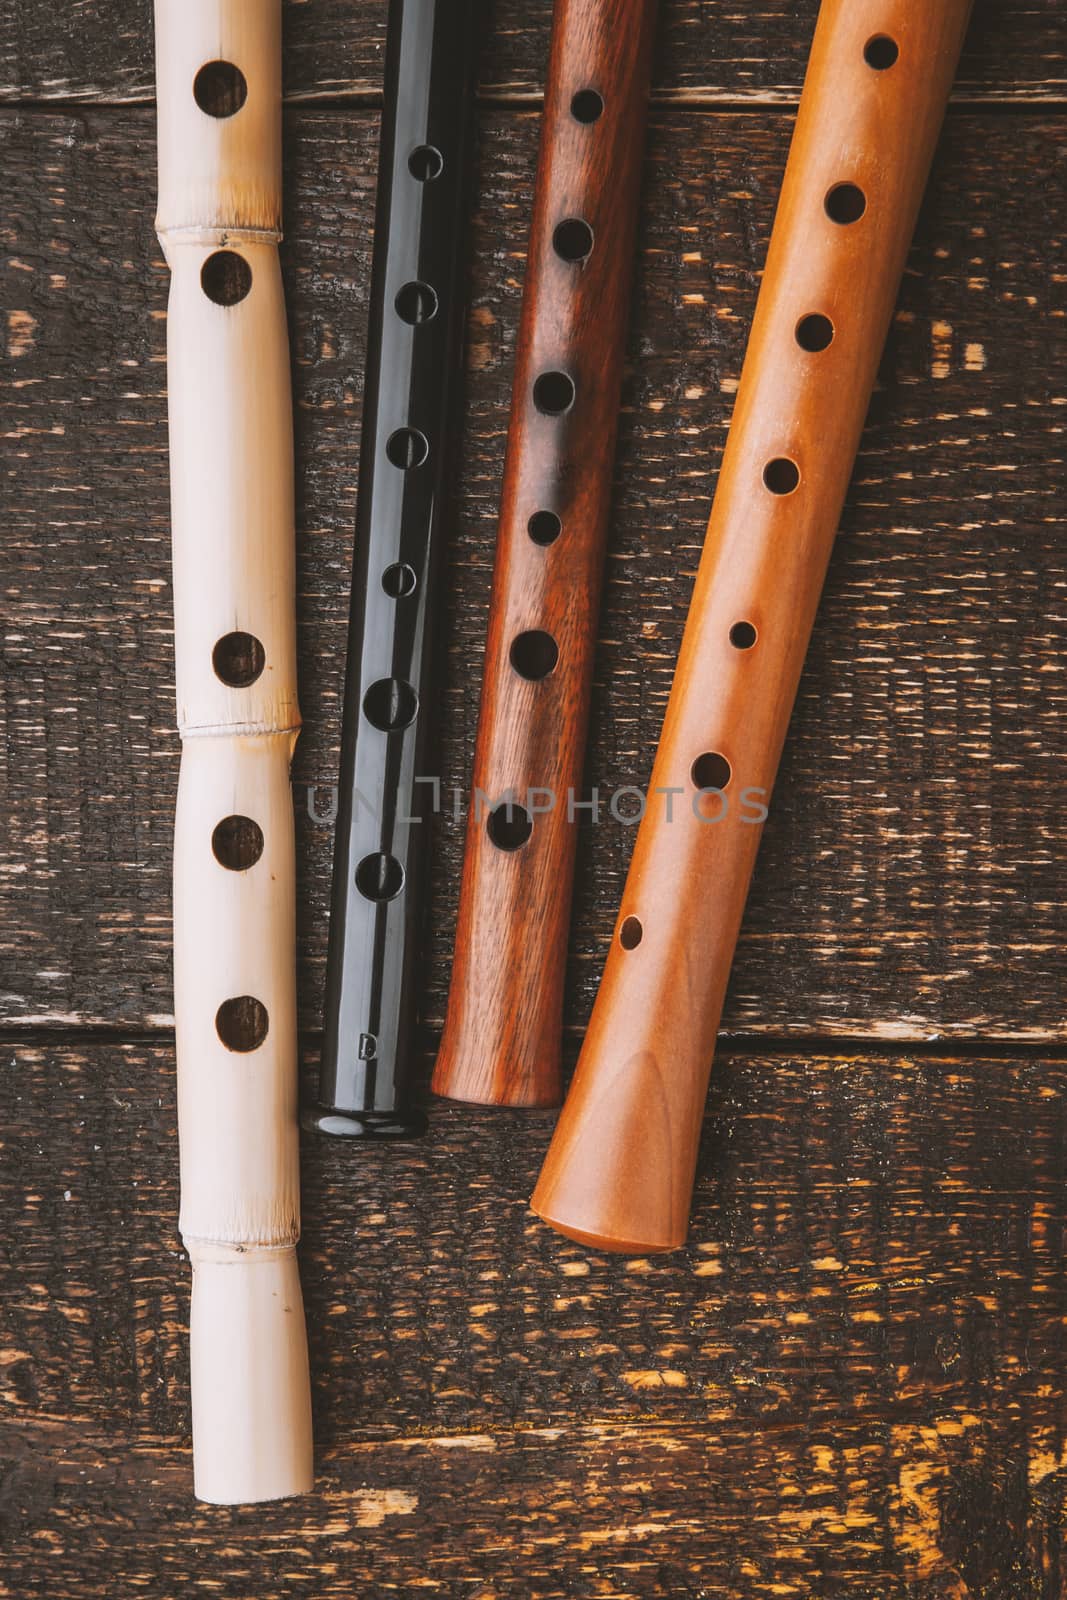 Set of flutes  on the wooden table vertical by Deniskarpenkov